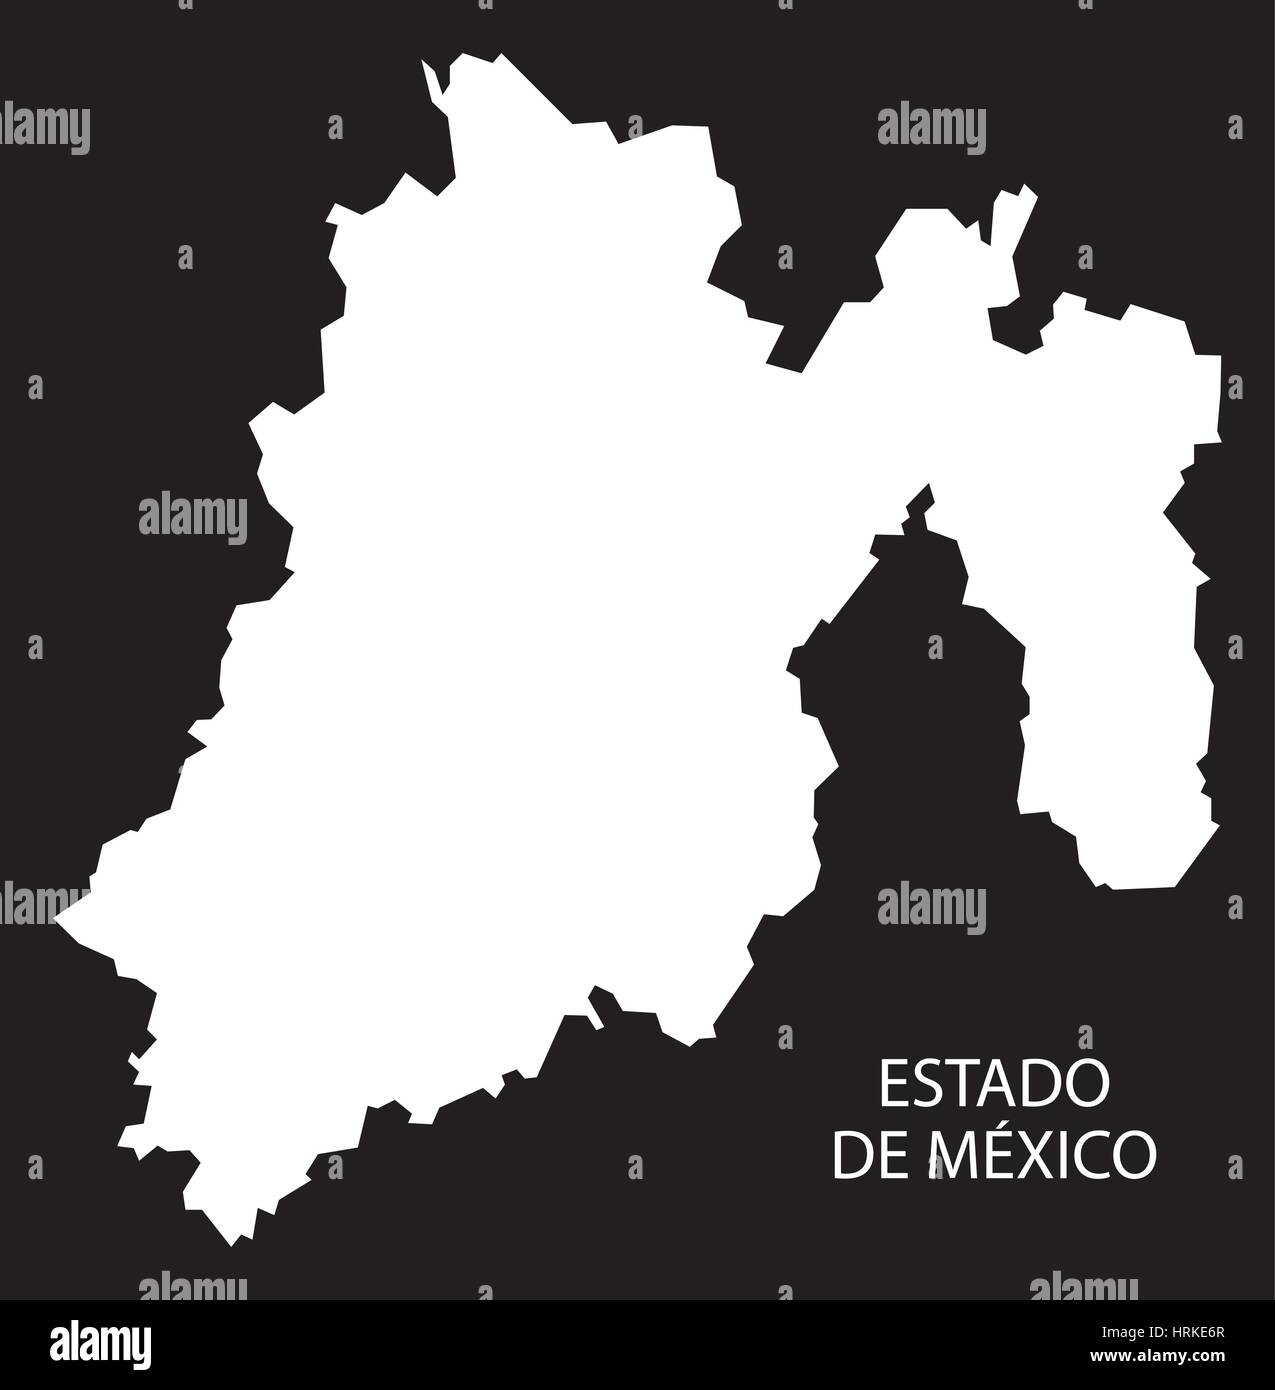 Estado De Mexico Map black inverted silhouette Stock Vector